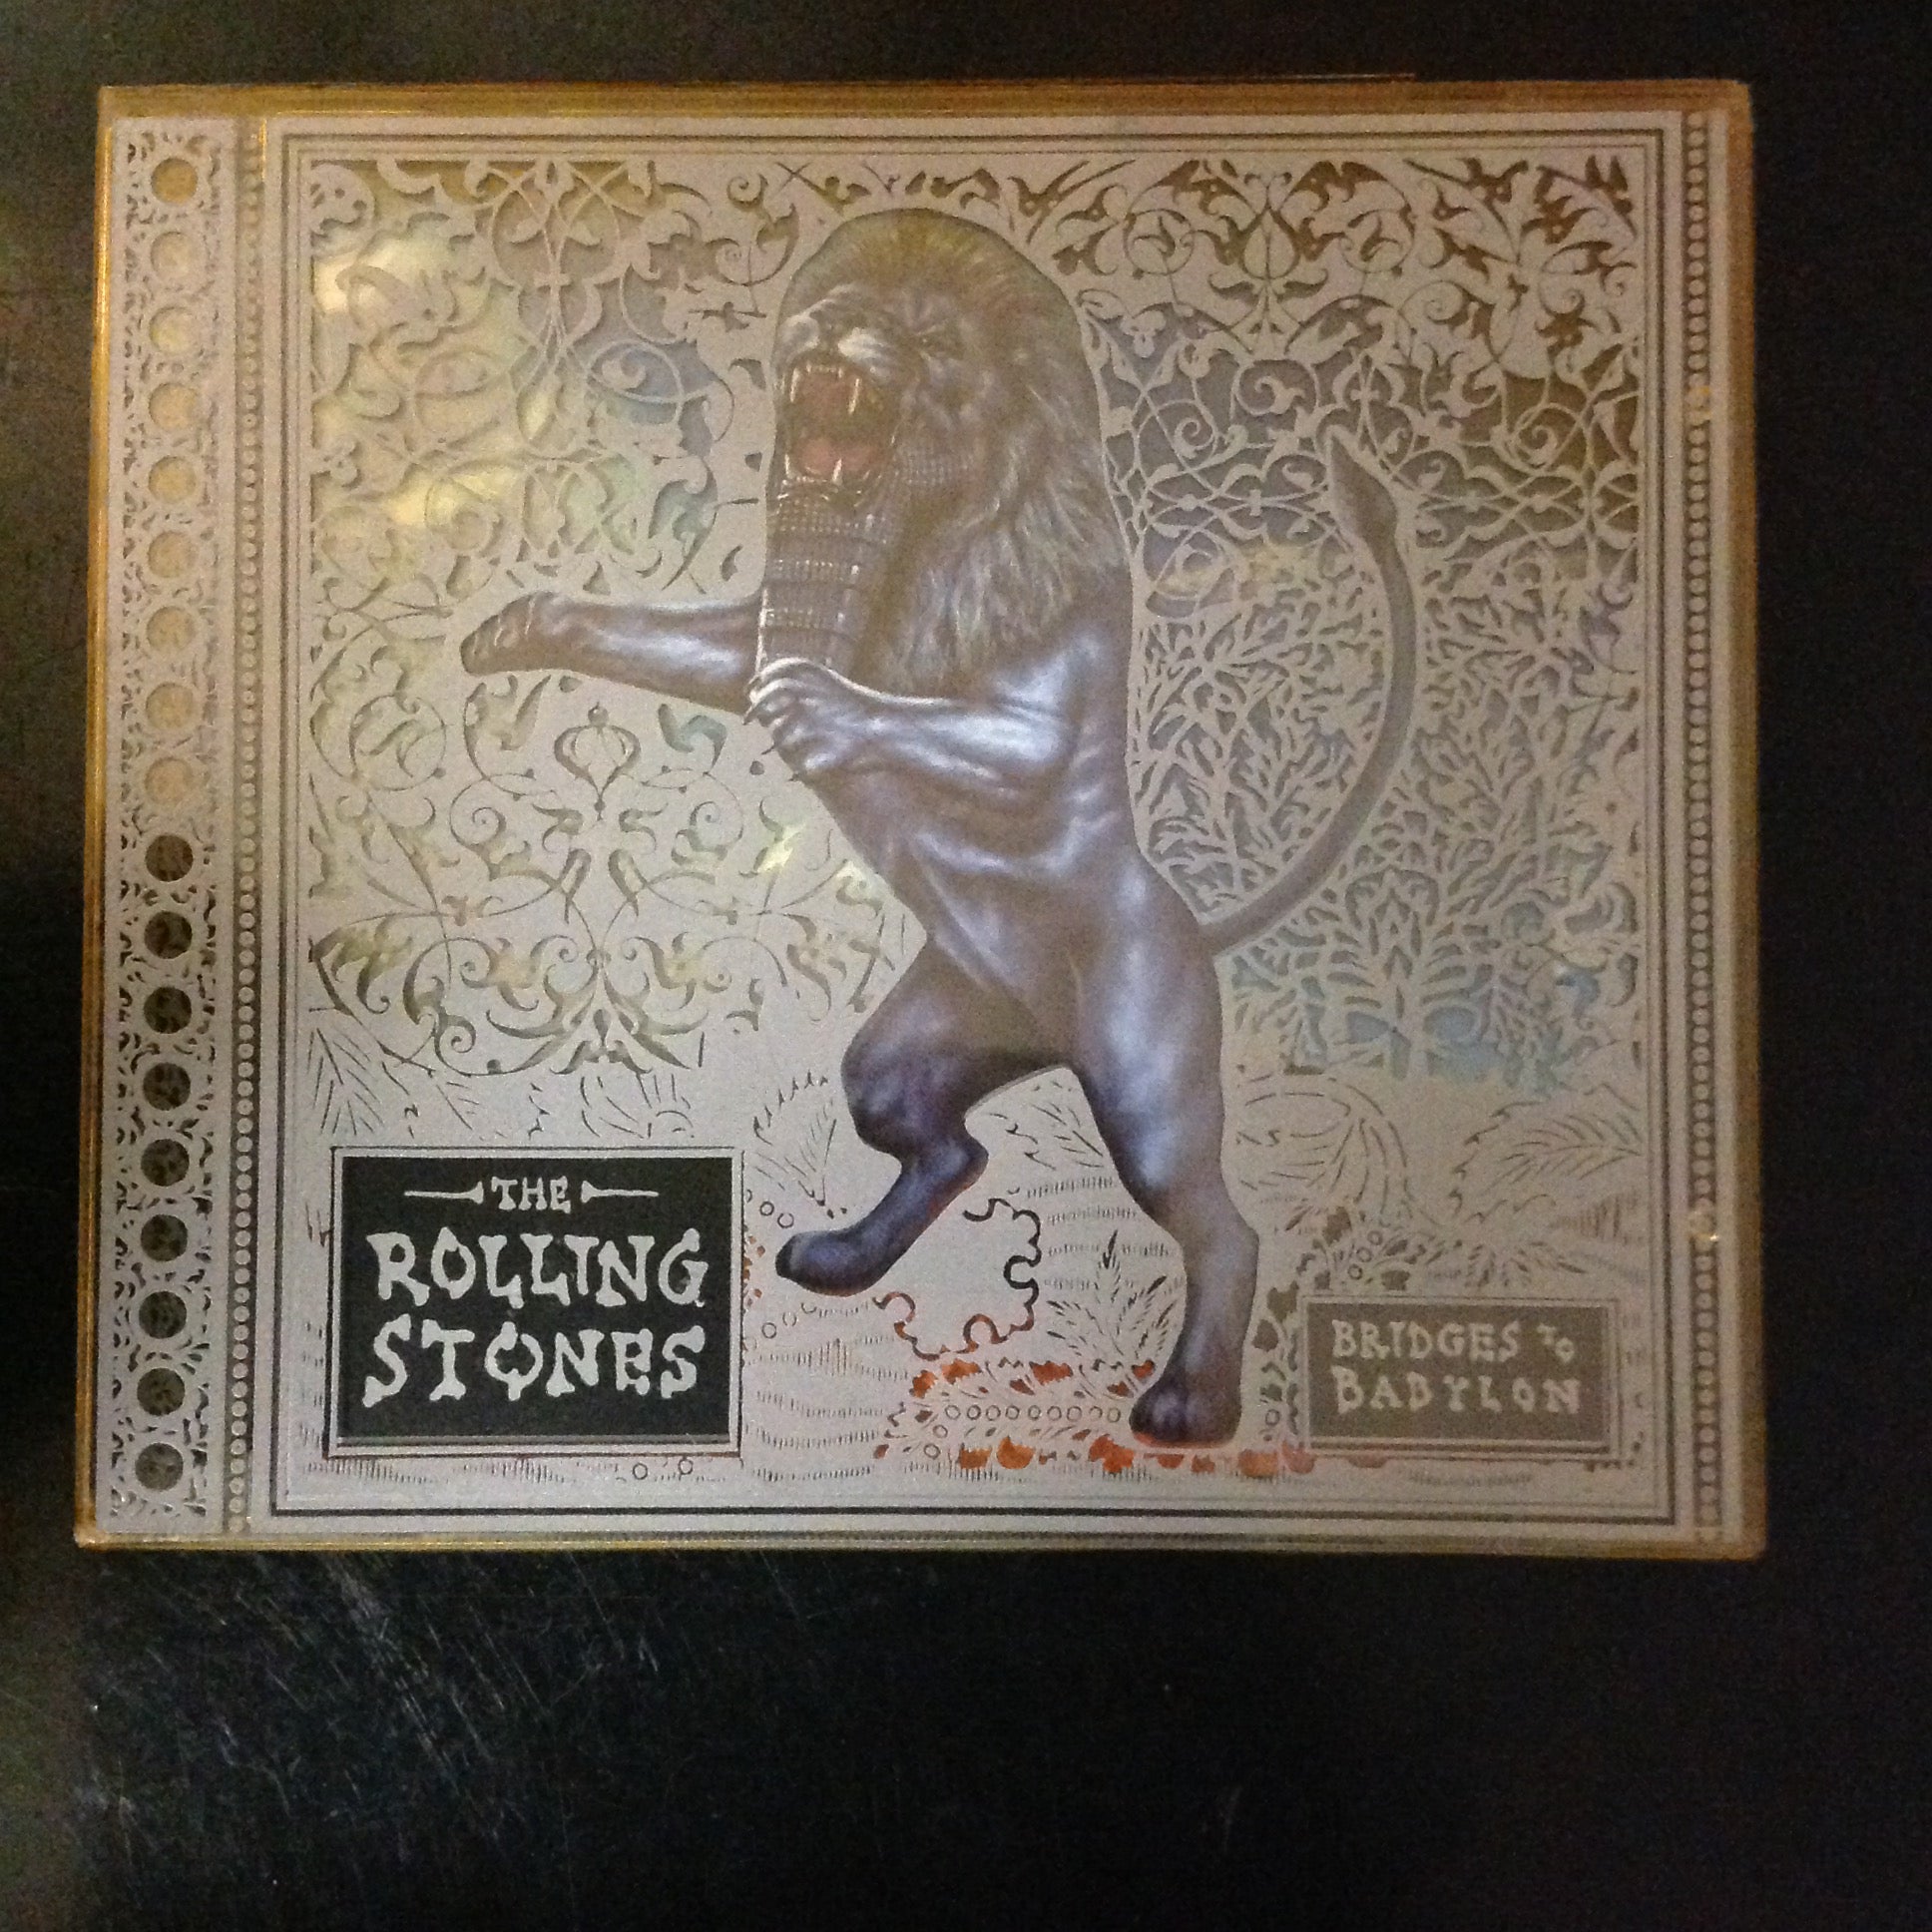 CD The Rolling Stones Bridge To Babylon Special Edition Slipcase 7243-8-44712-2-4